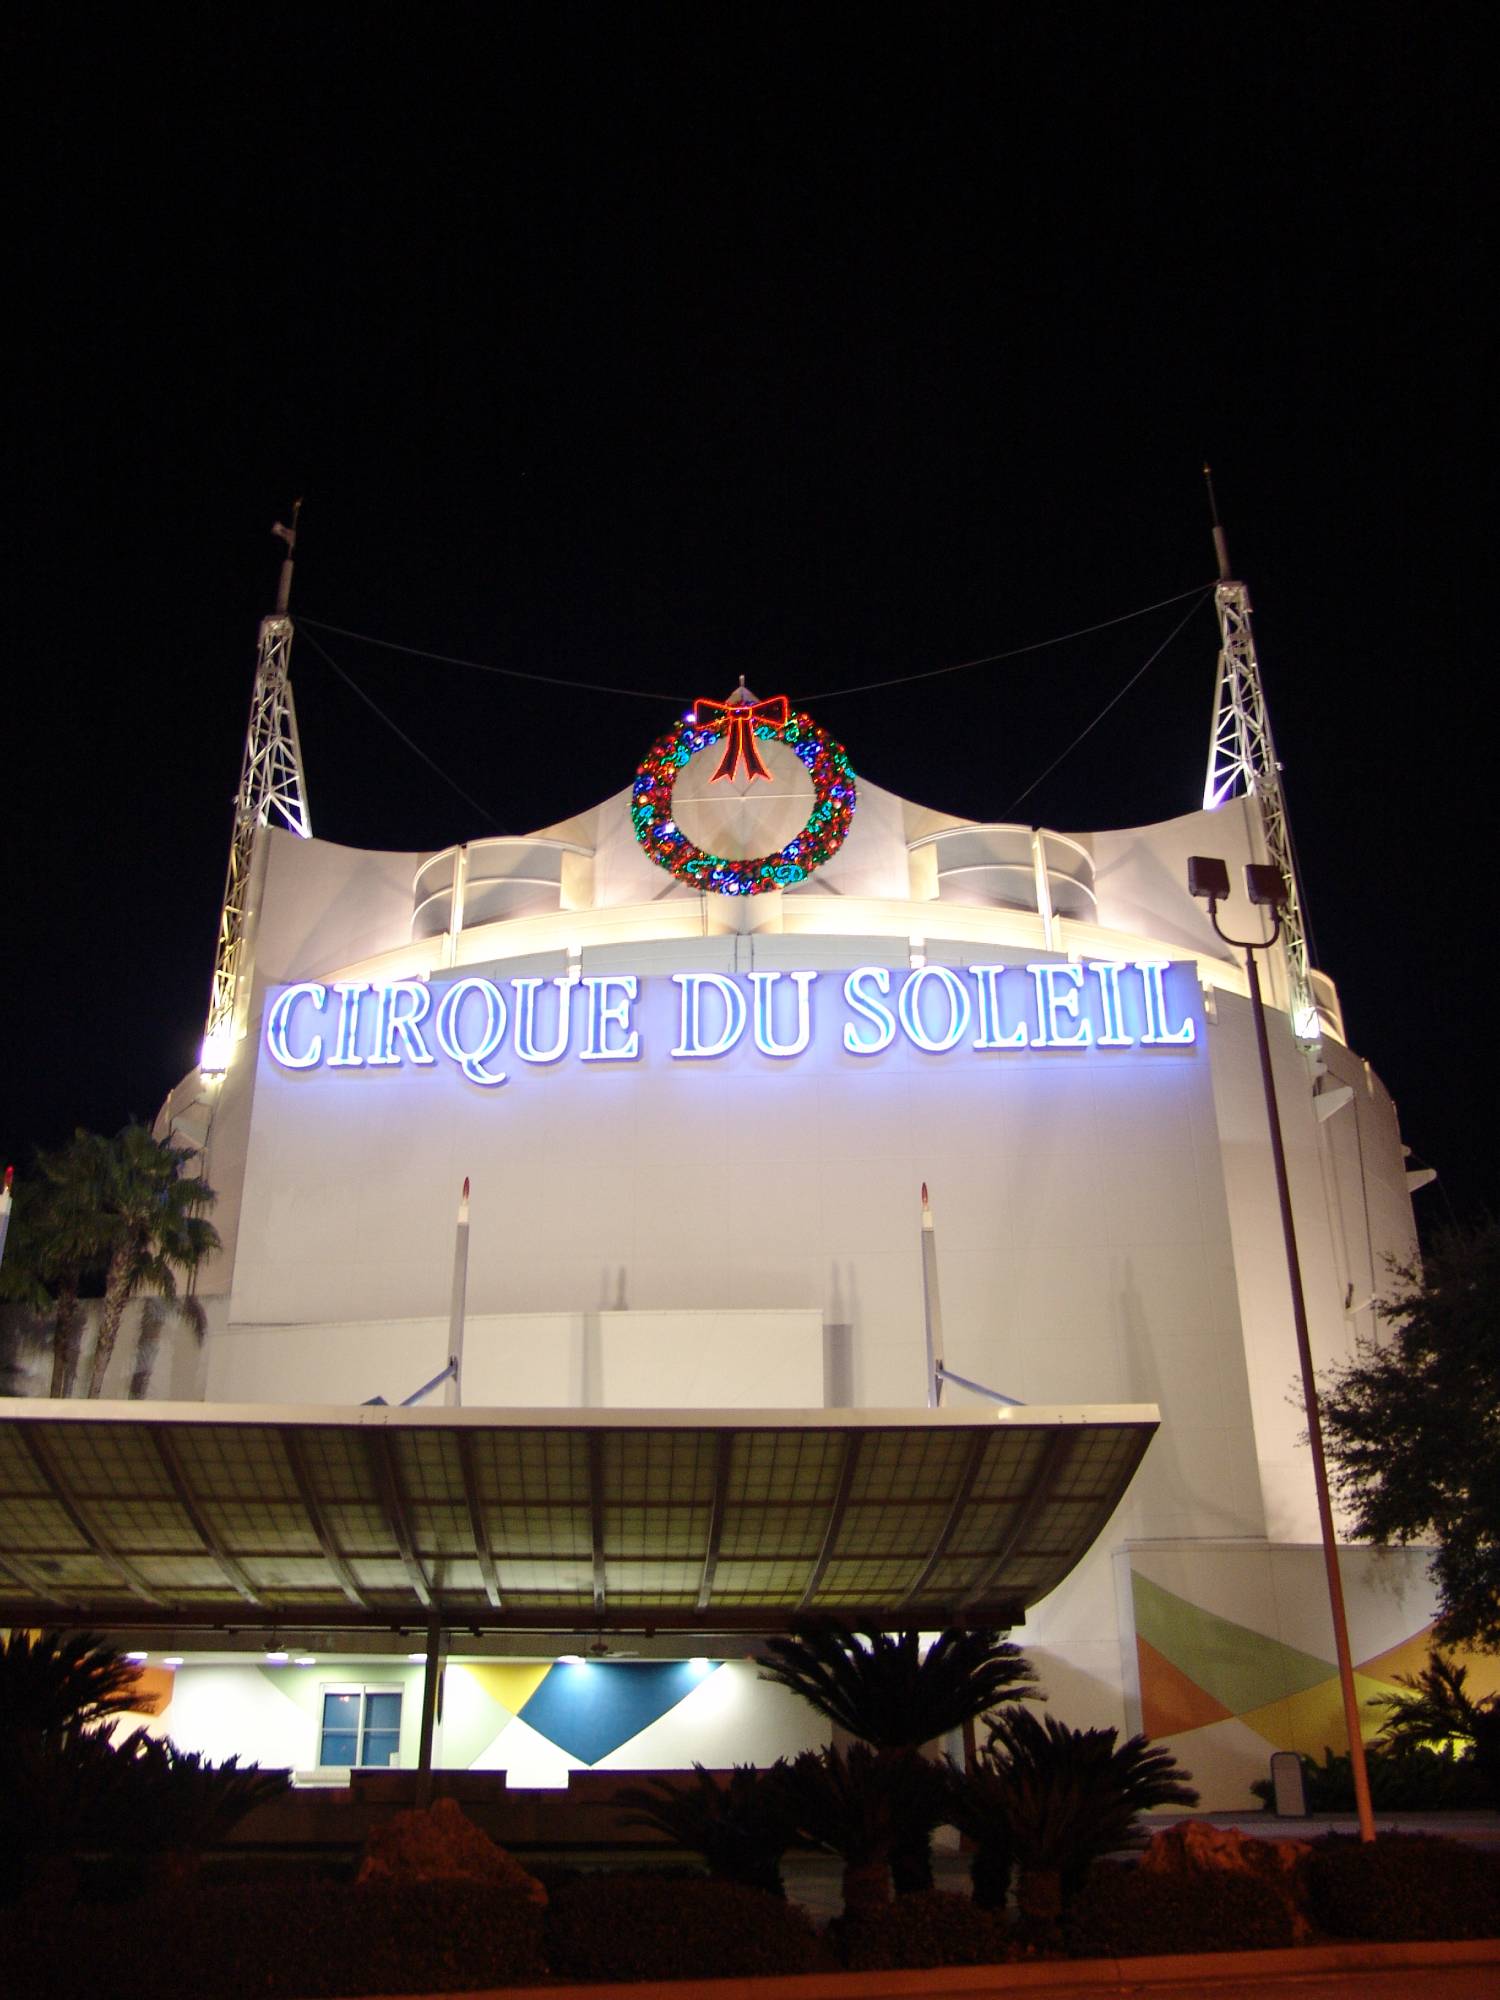 Downtown Disney - Cirque du Soleil